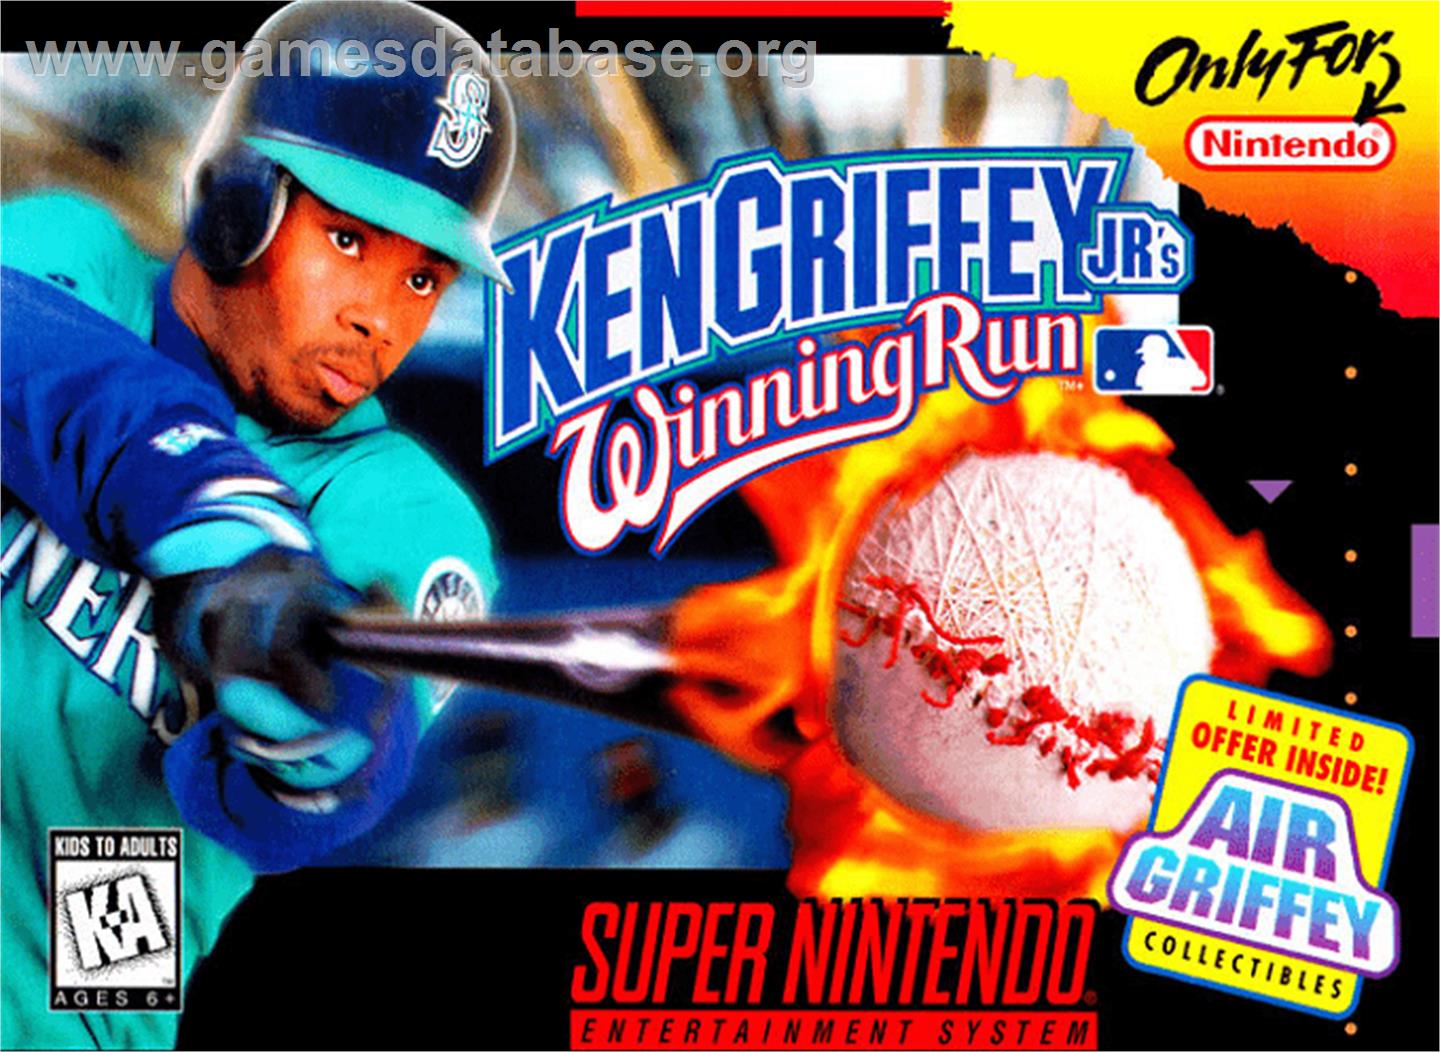 Ken Griffey Jr.'s Winning Run - Nintendo SNES - Artwork - Box